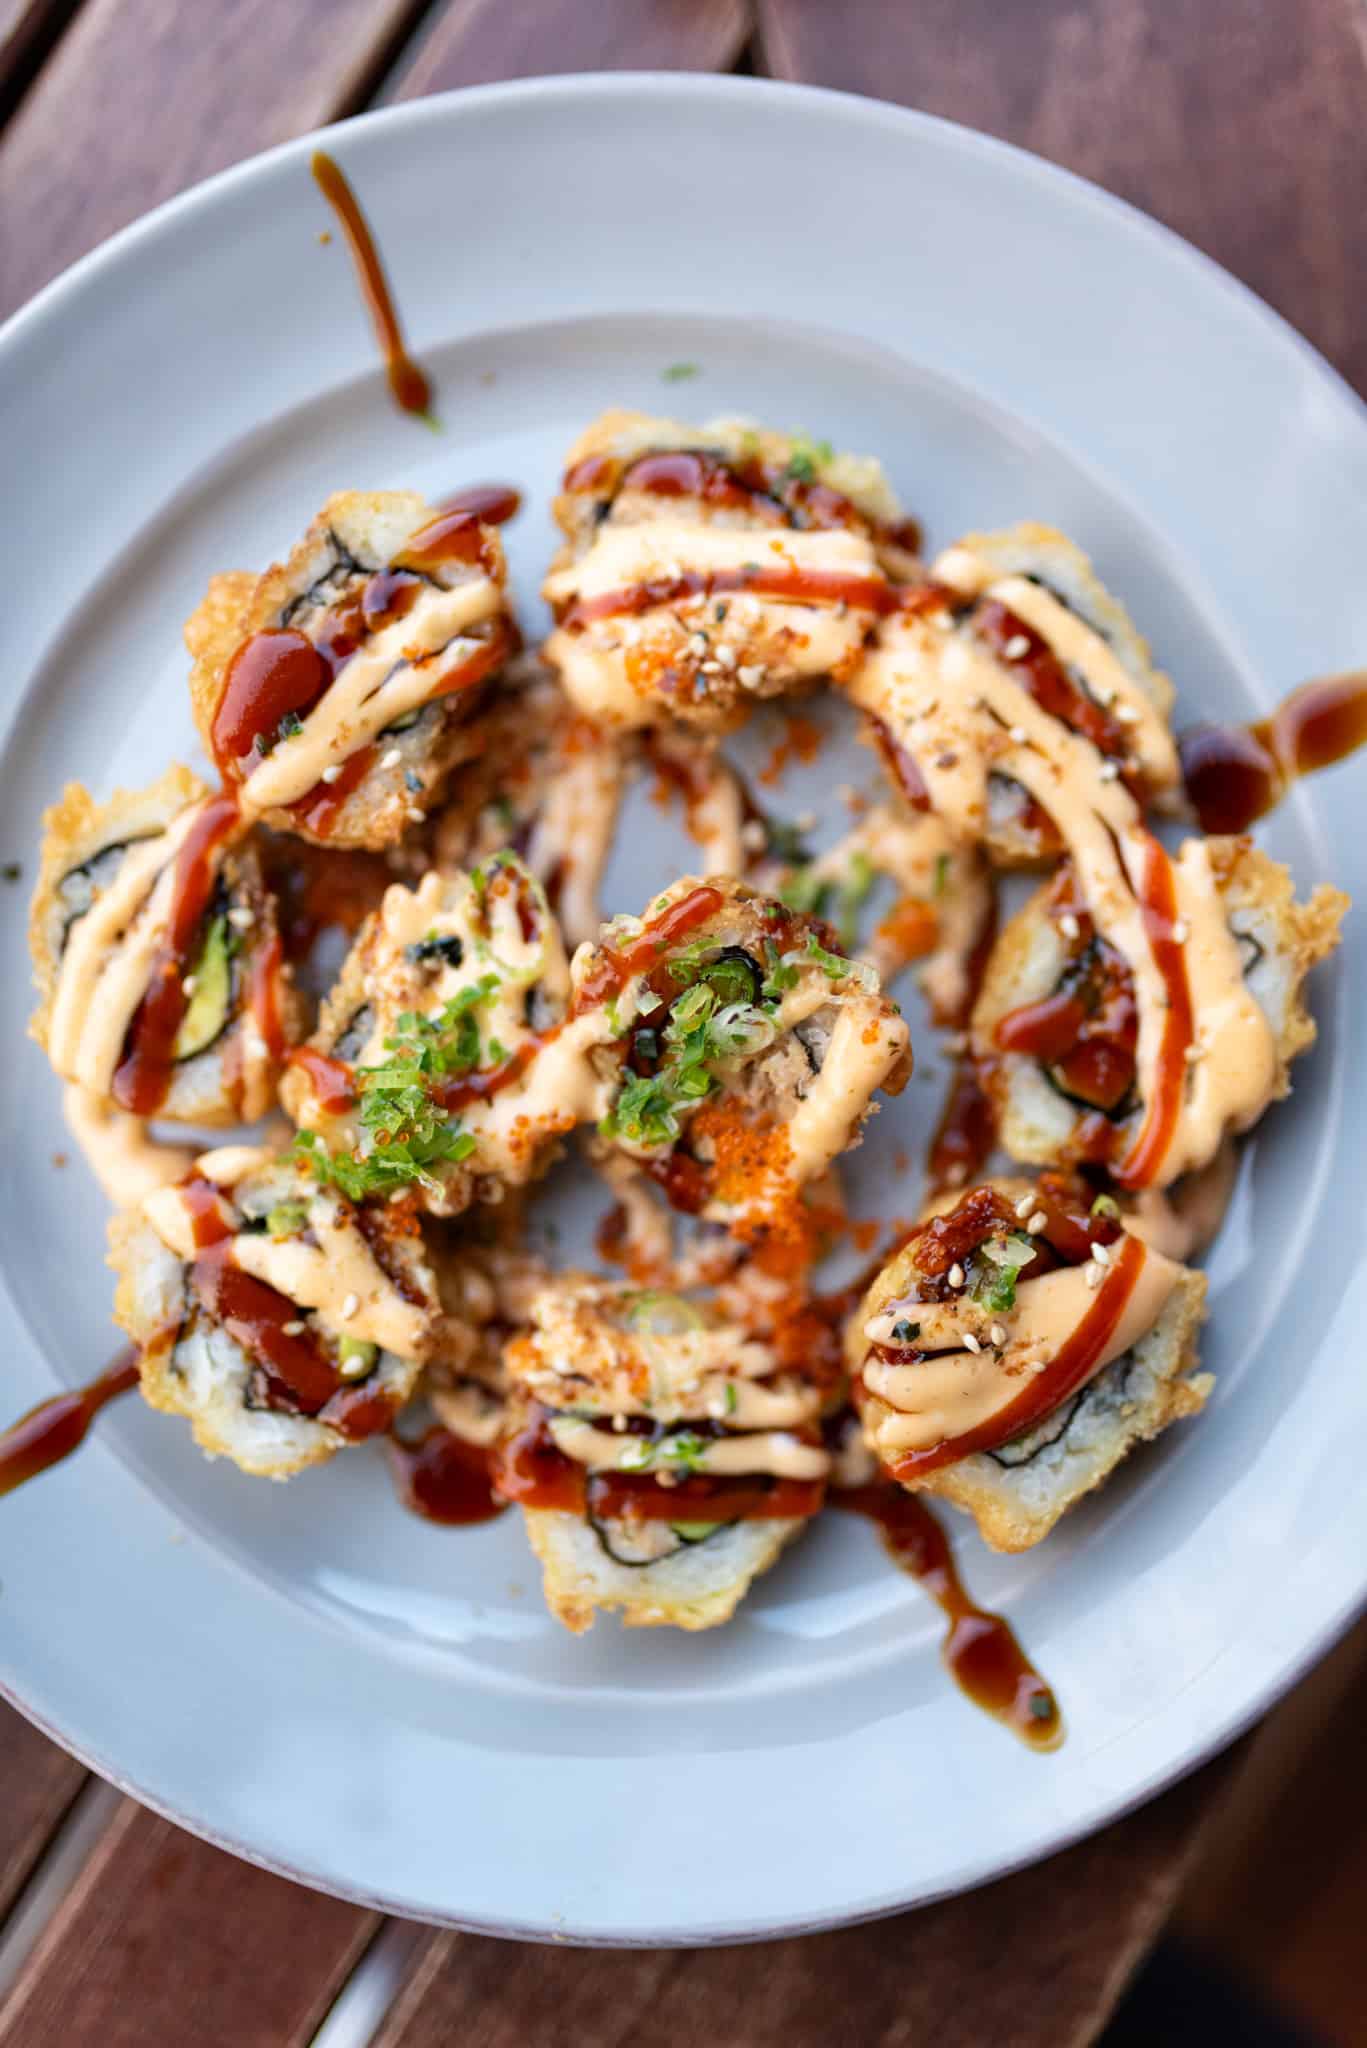 fried sushi rolls — the Hot Tuna by Domo